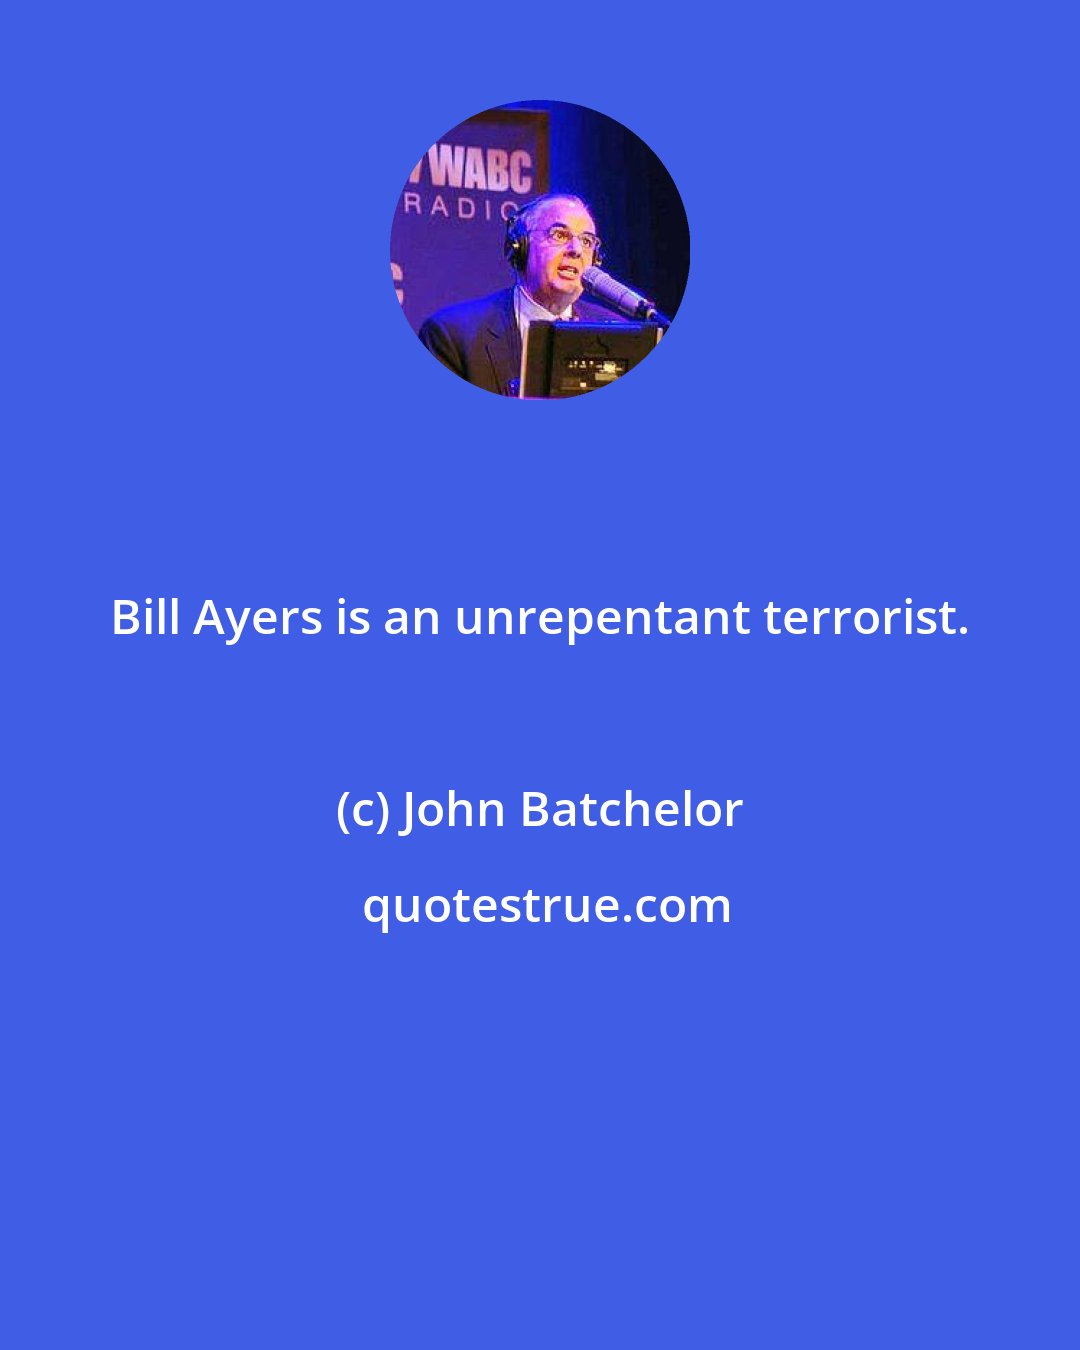 John Batchelor: Bill Ayers is an unrepentant terrorist.